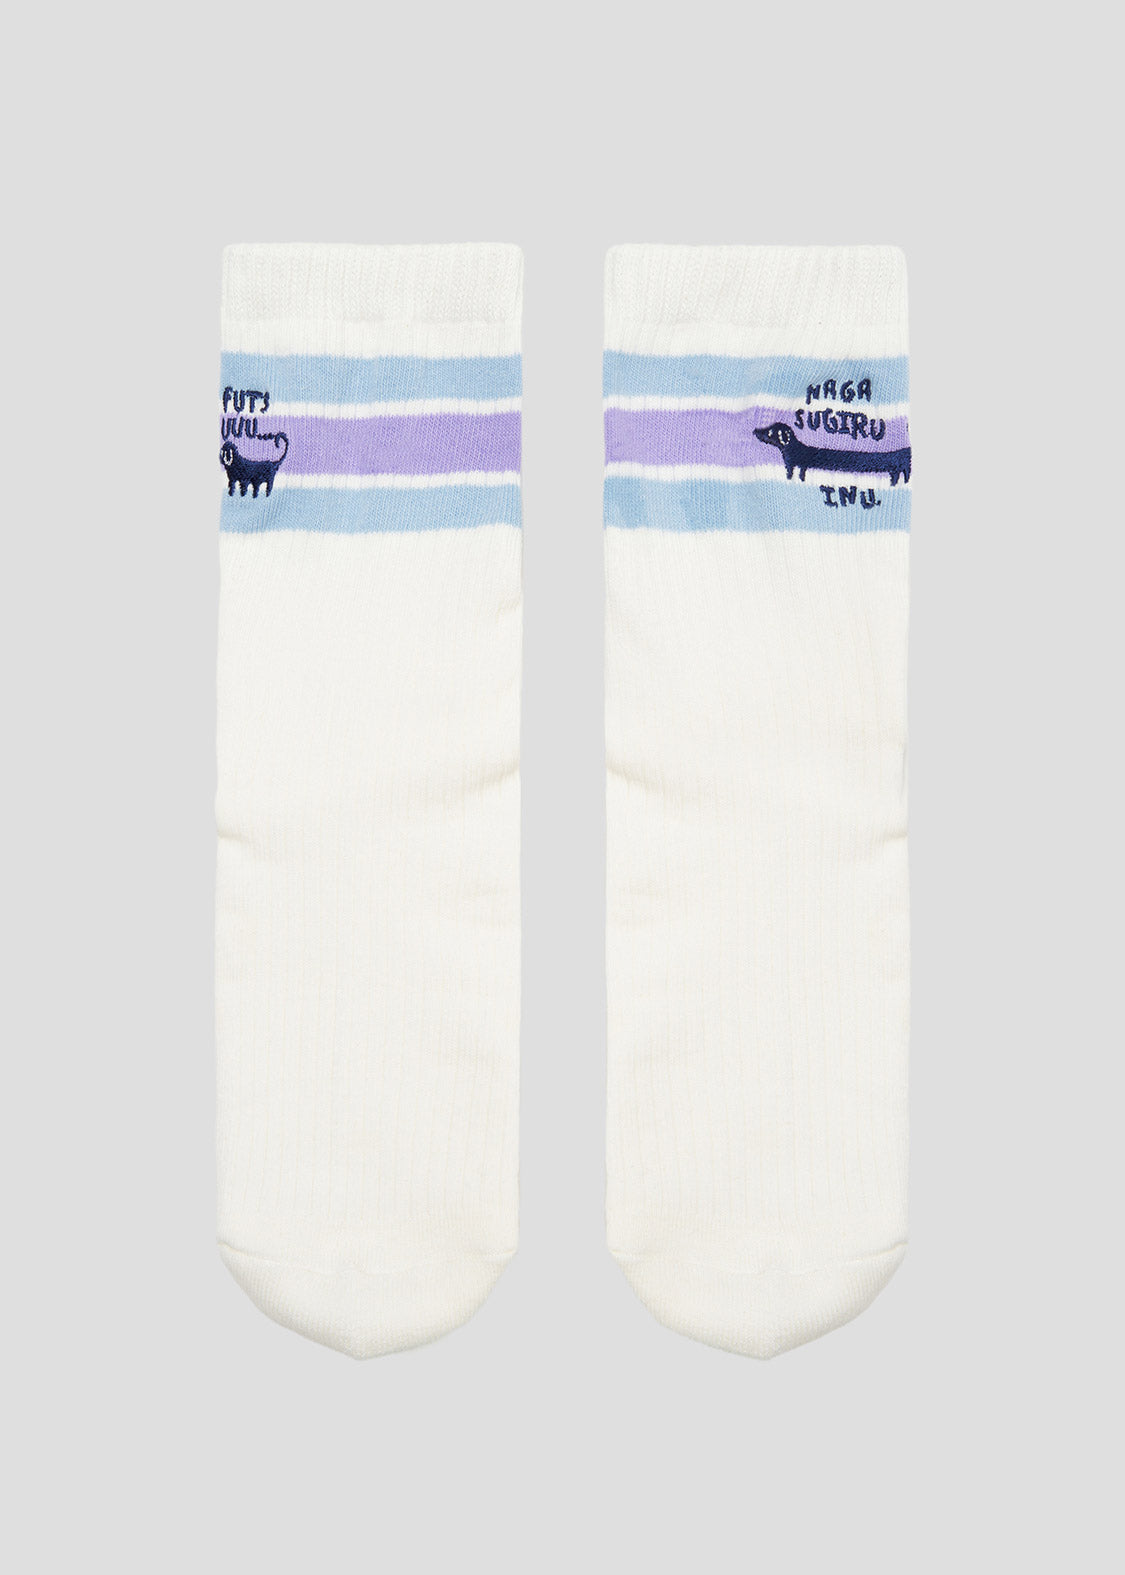 Middle Socks (Nagasugiru Inu 04)